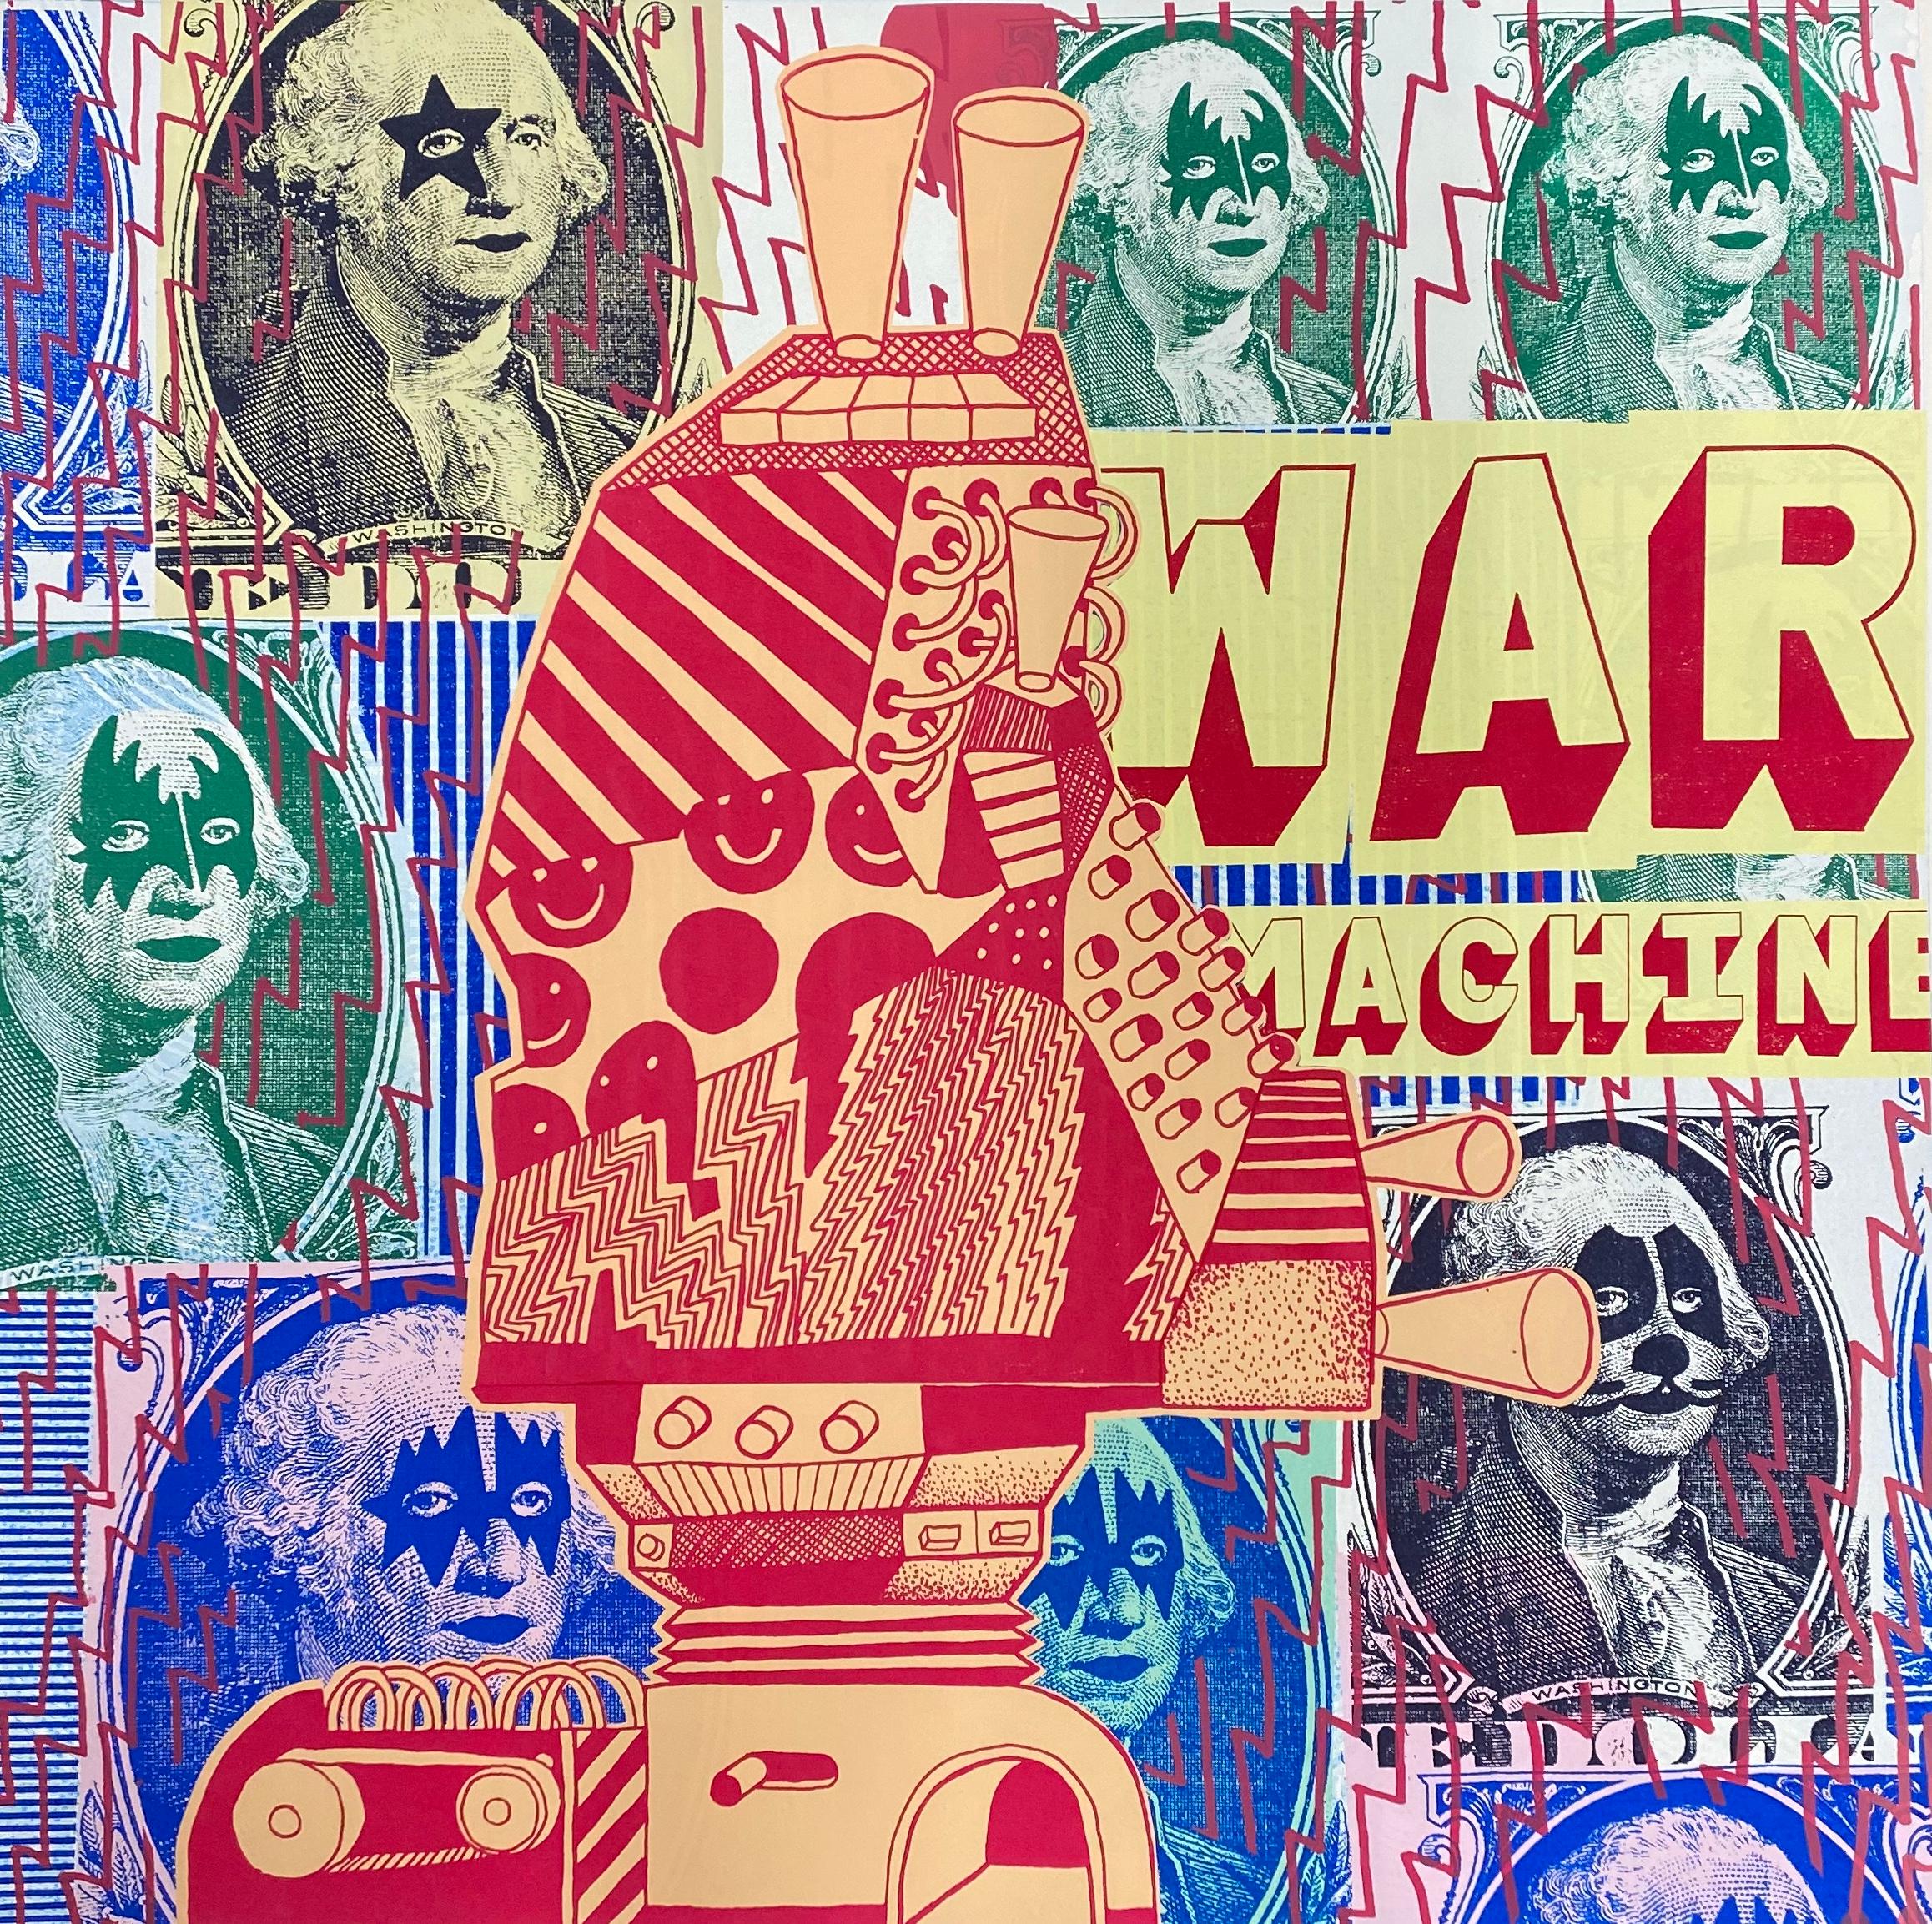 War Machine (2/3) - Print by Chadwick Tolley